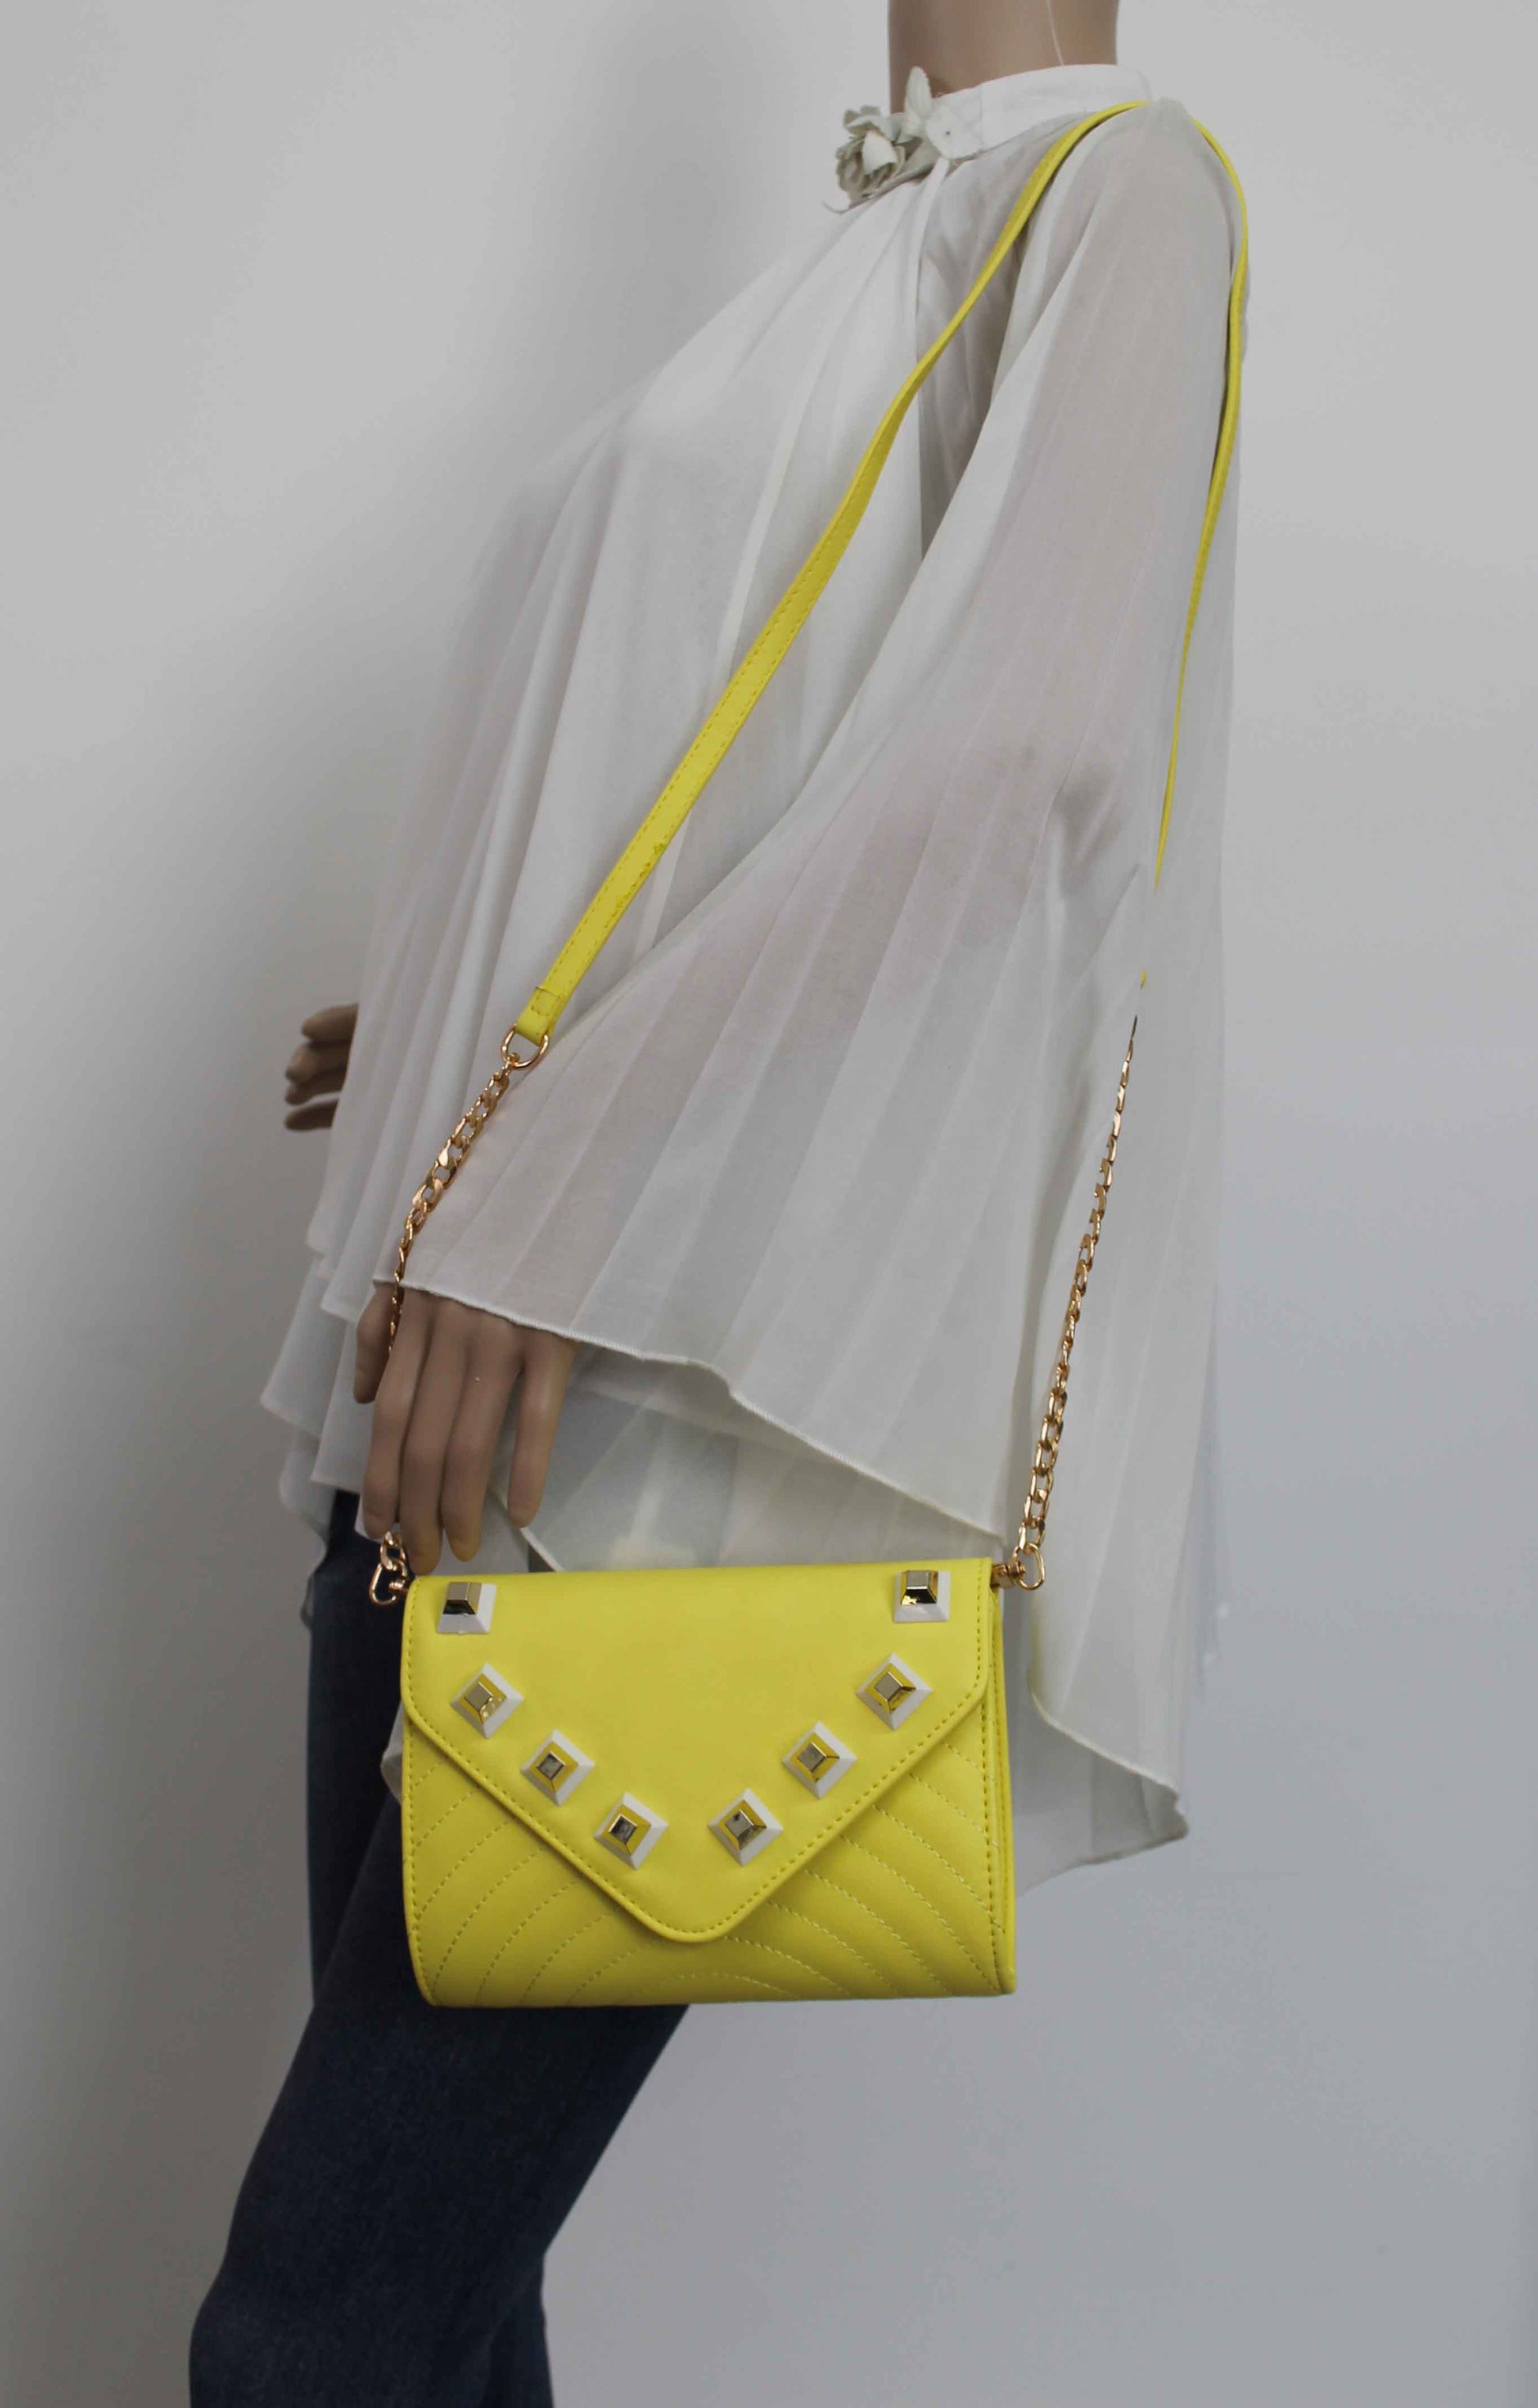 SWANKYSWANS Serafina Clutch Bag Yellow Cute Cheap Clutch Bag For Weddings School and Work